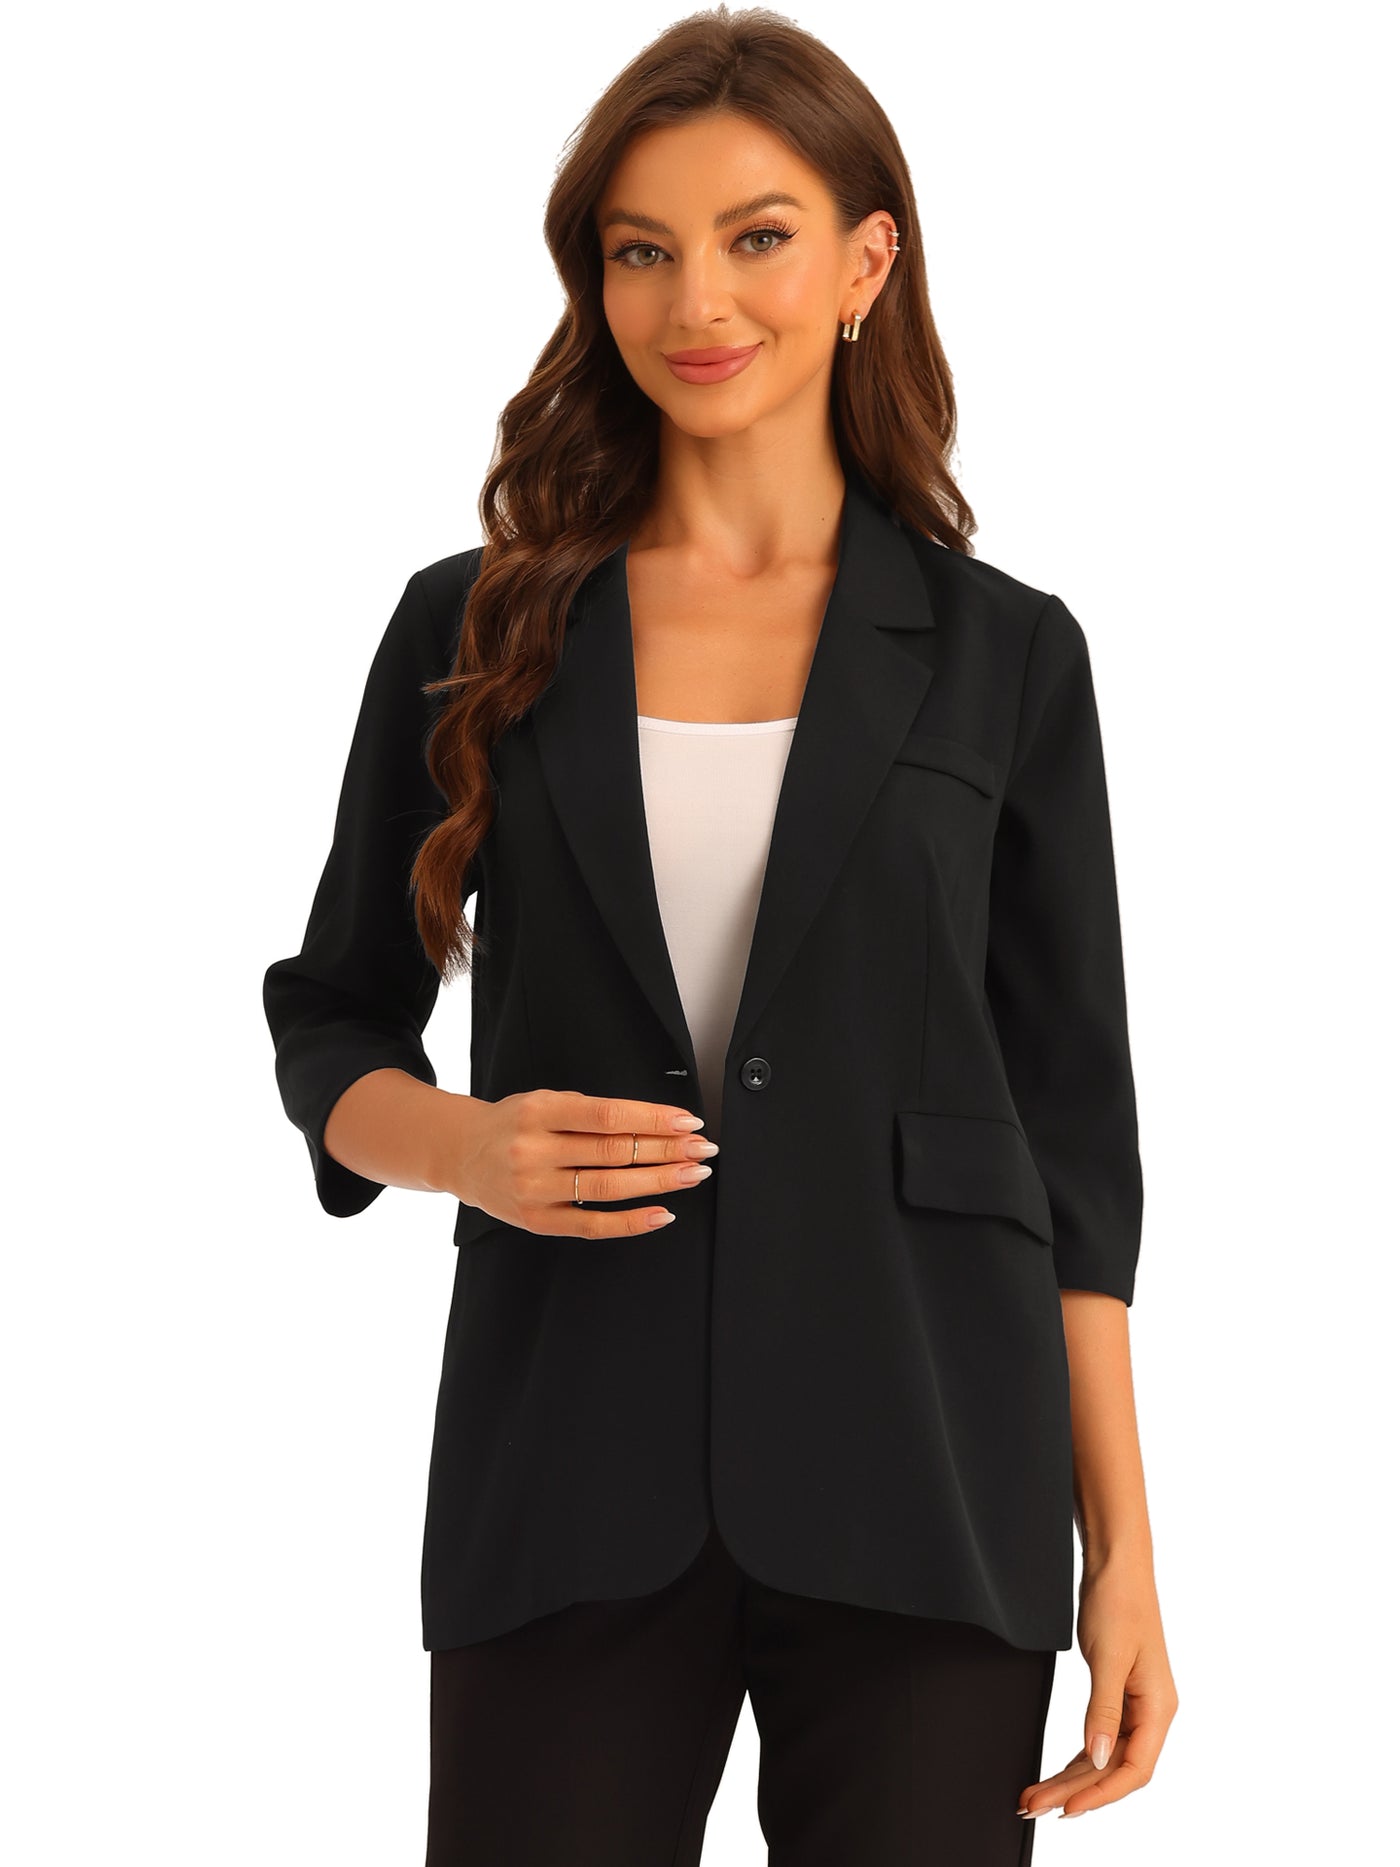 Allegra K Work Office Stretch Blazer for Women's Lapel Collar Dressy Casual Suit Jacket